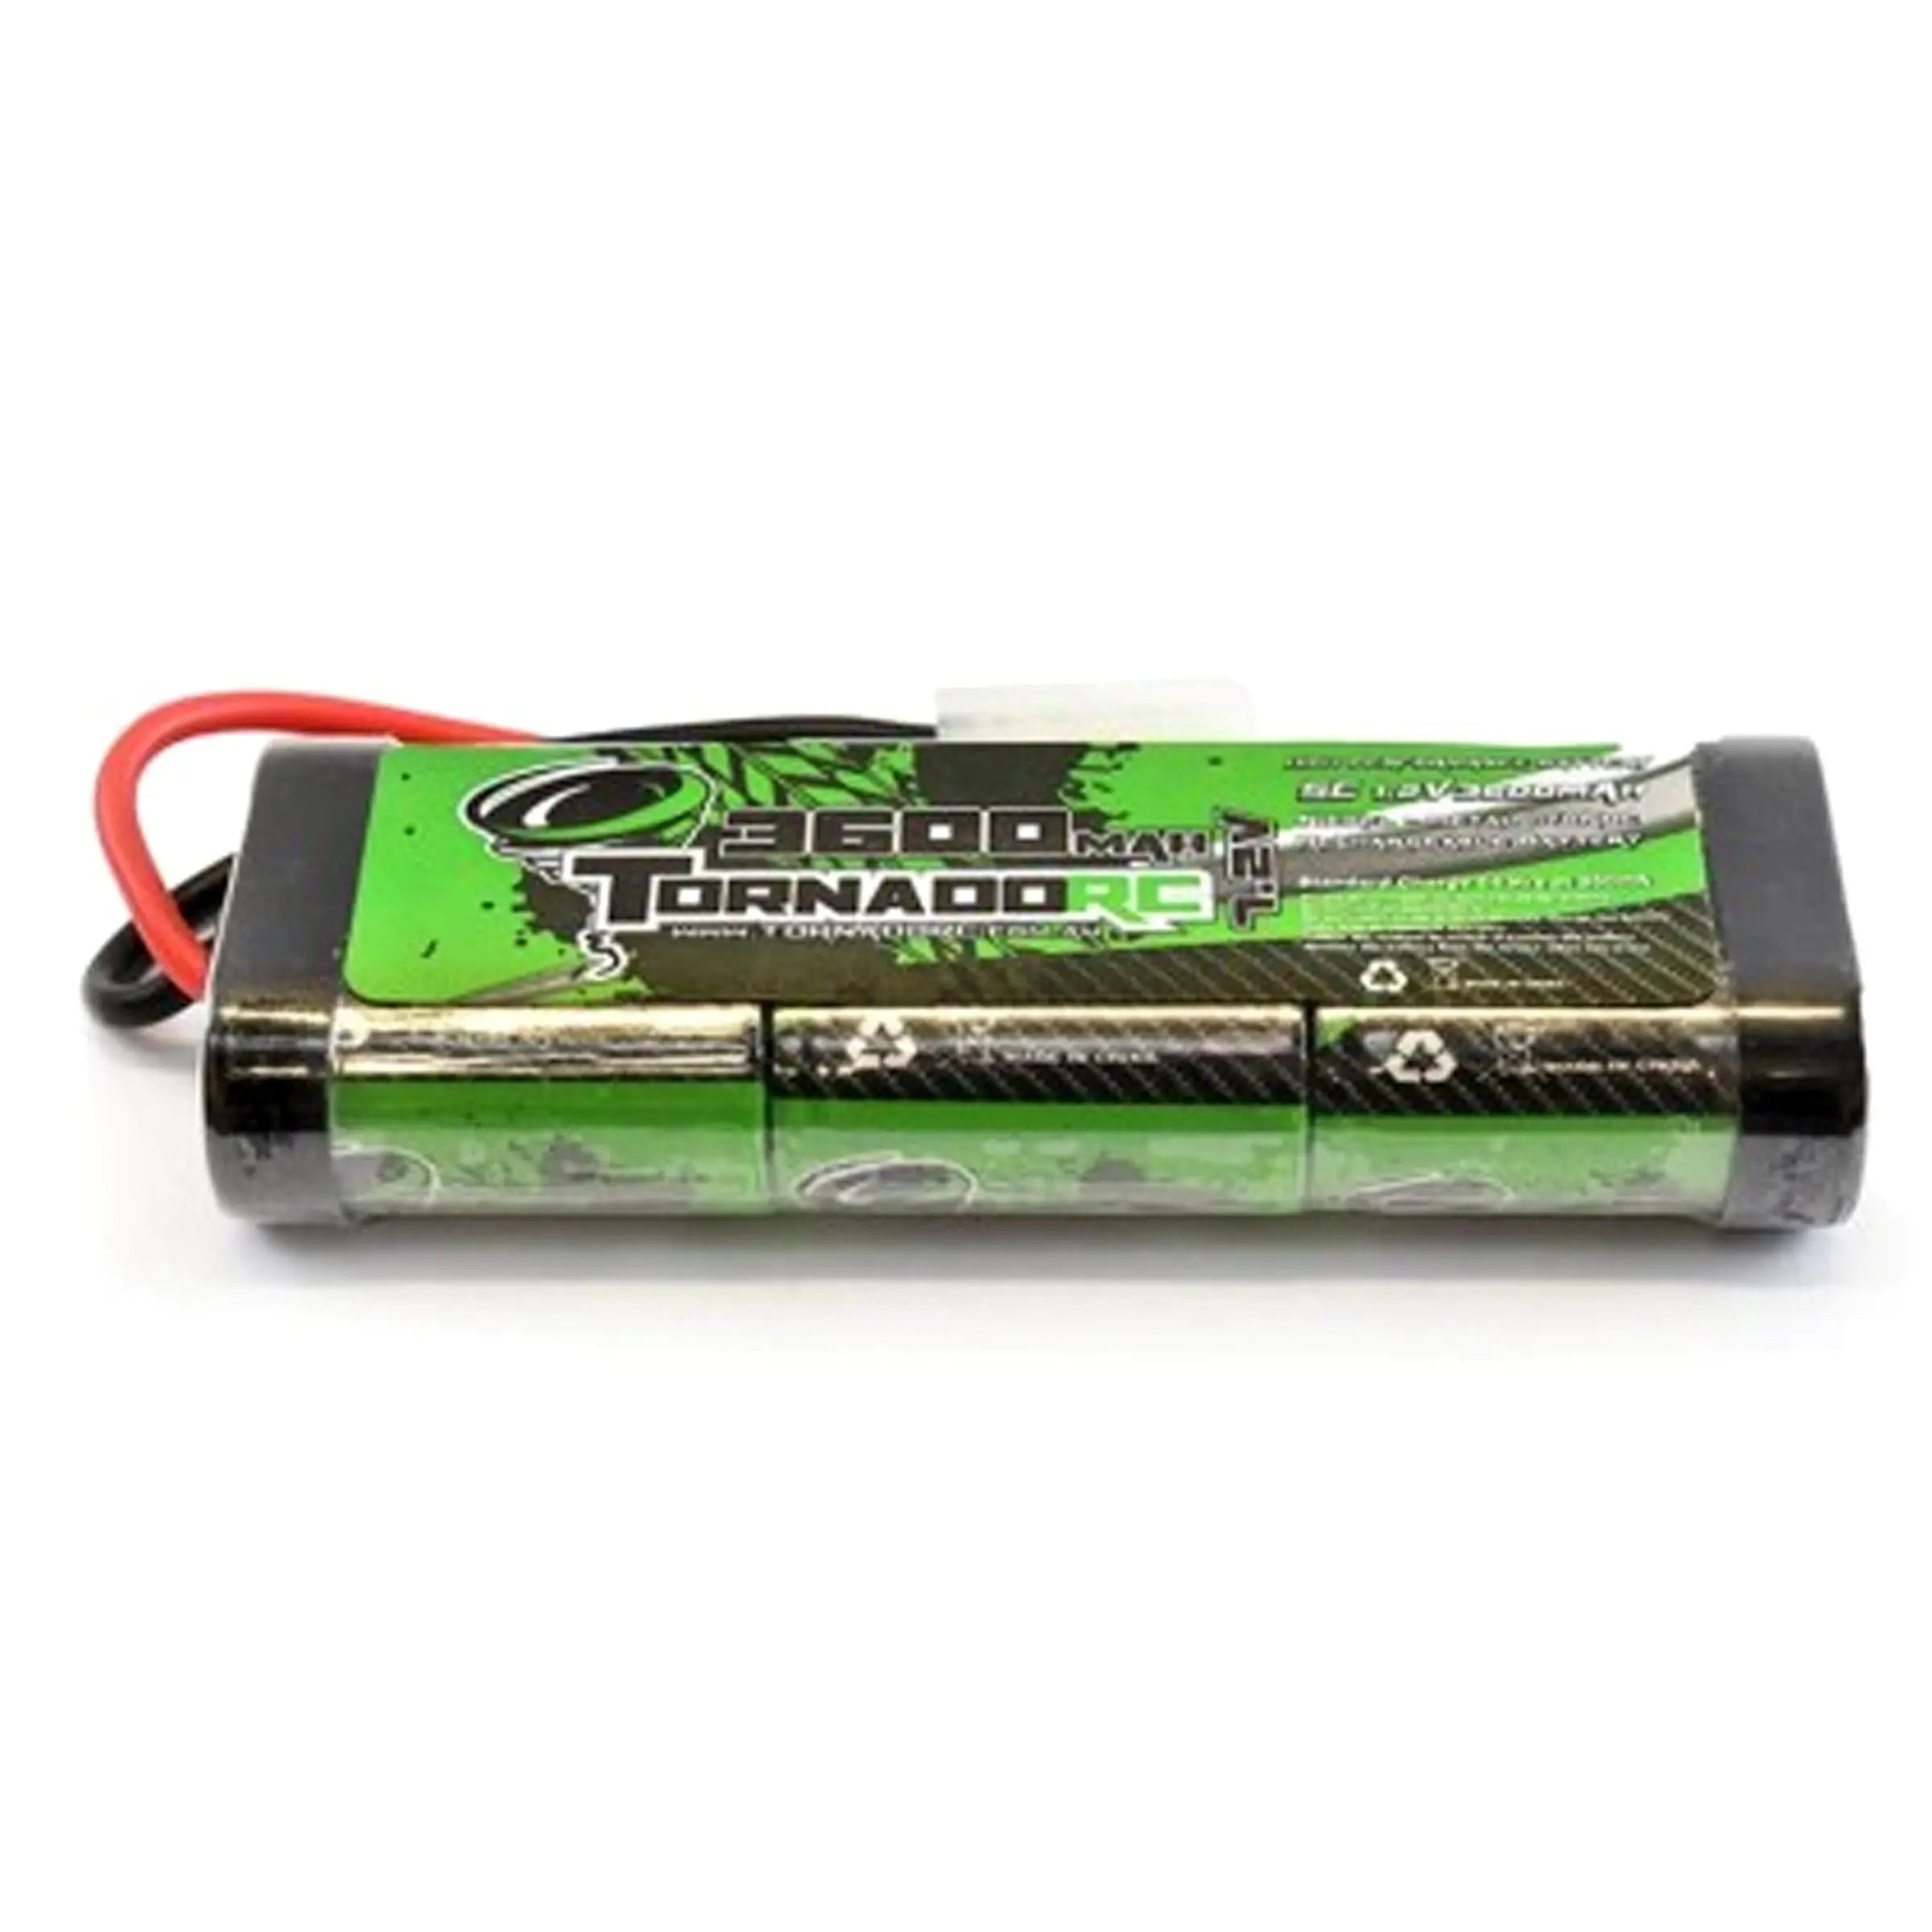 Tornado 7.2v 3600mah Stick Pack Battery For RC Radio Control Car - Tamiya Connector Deals499